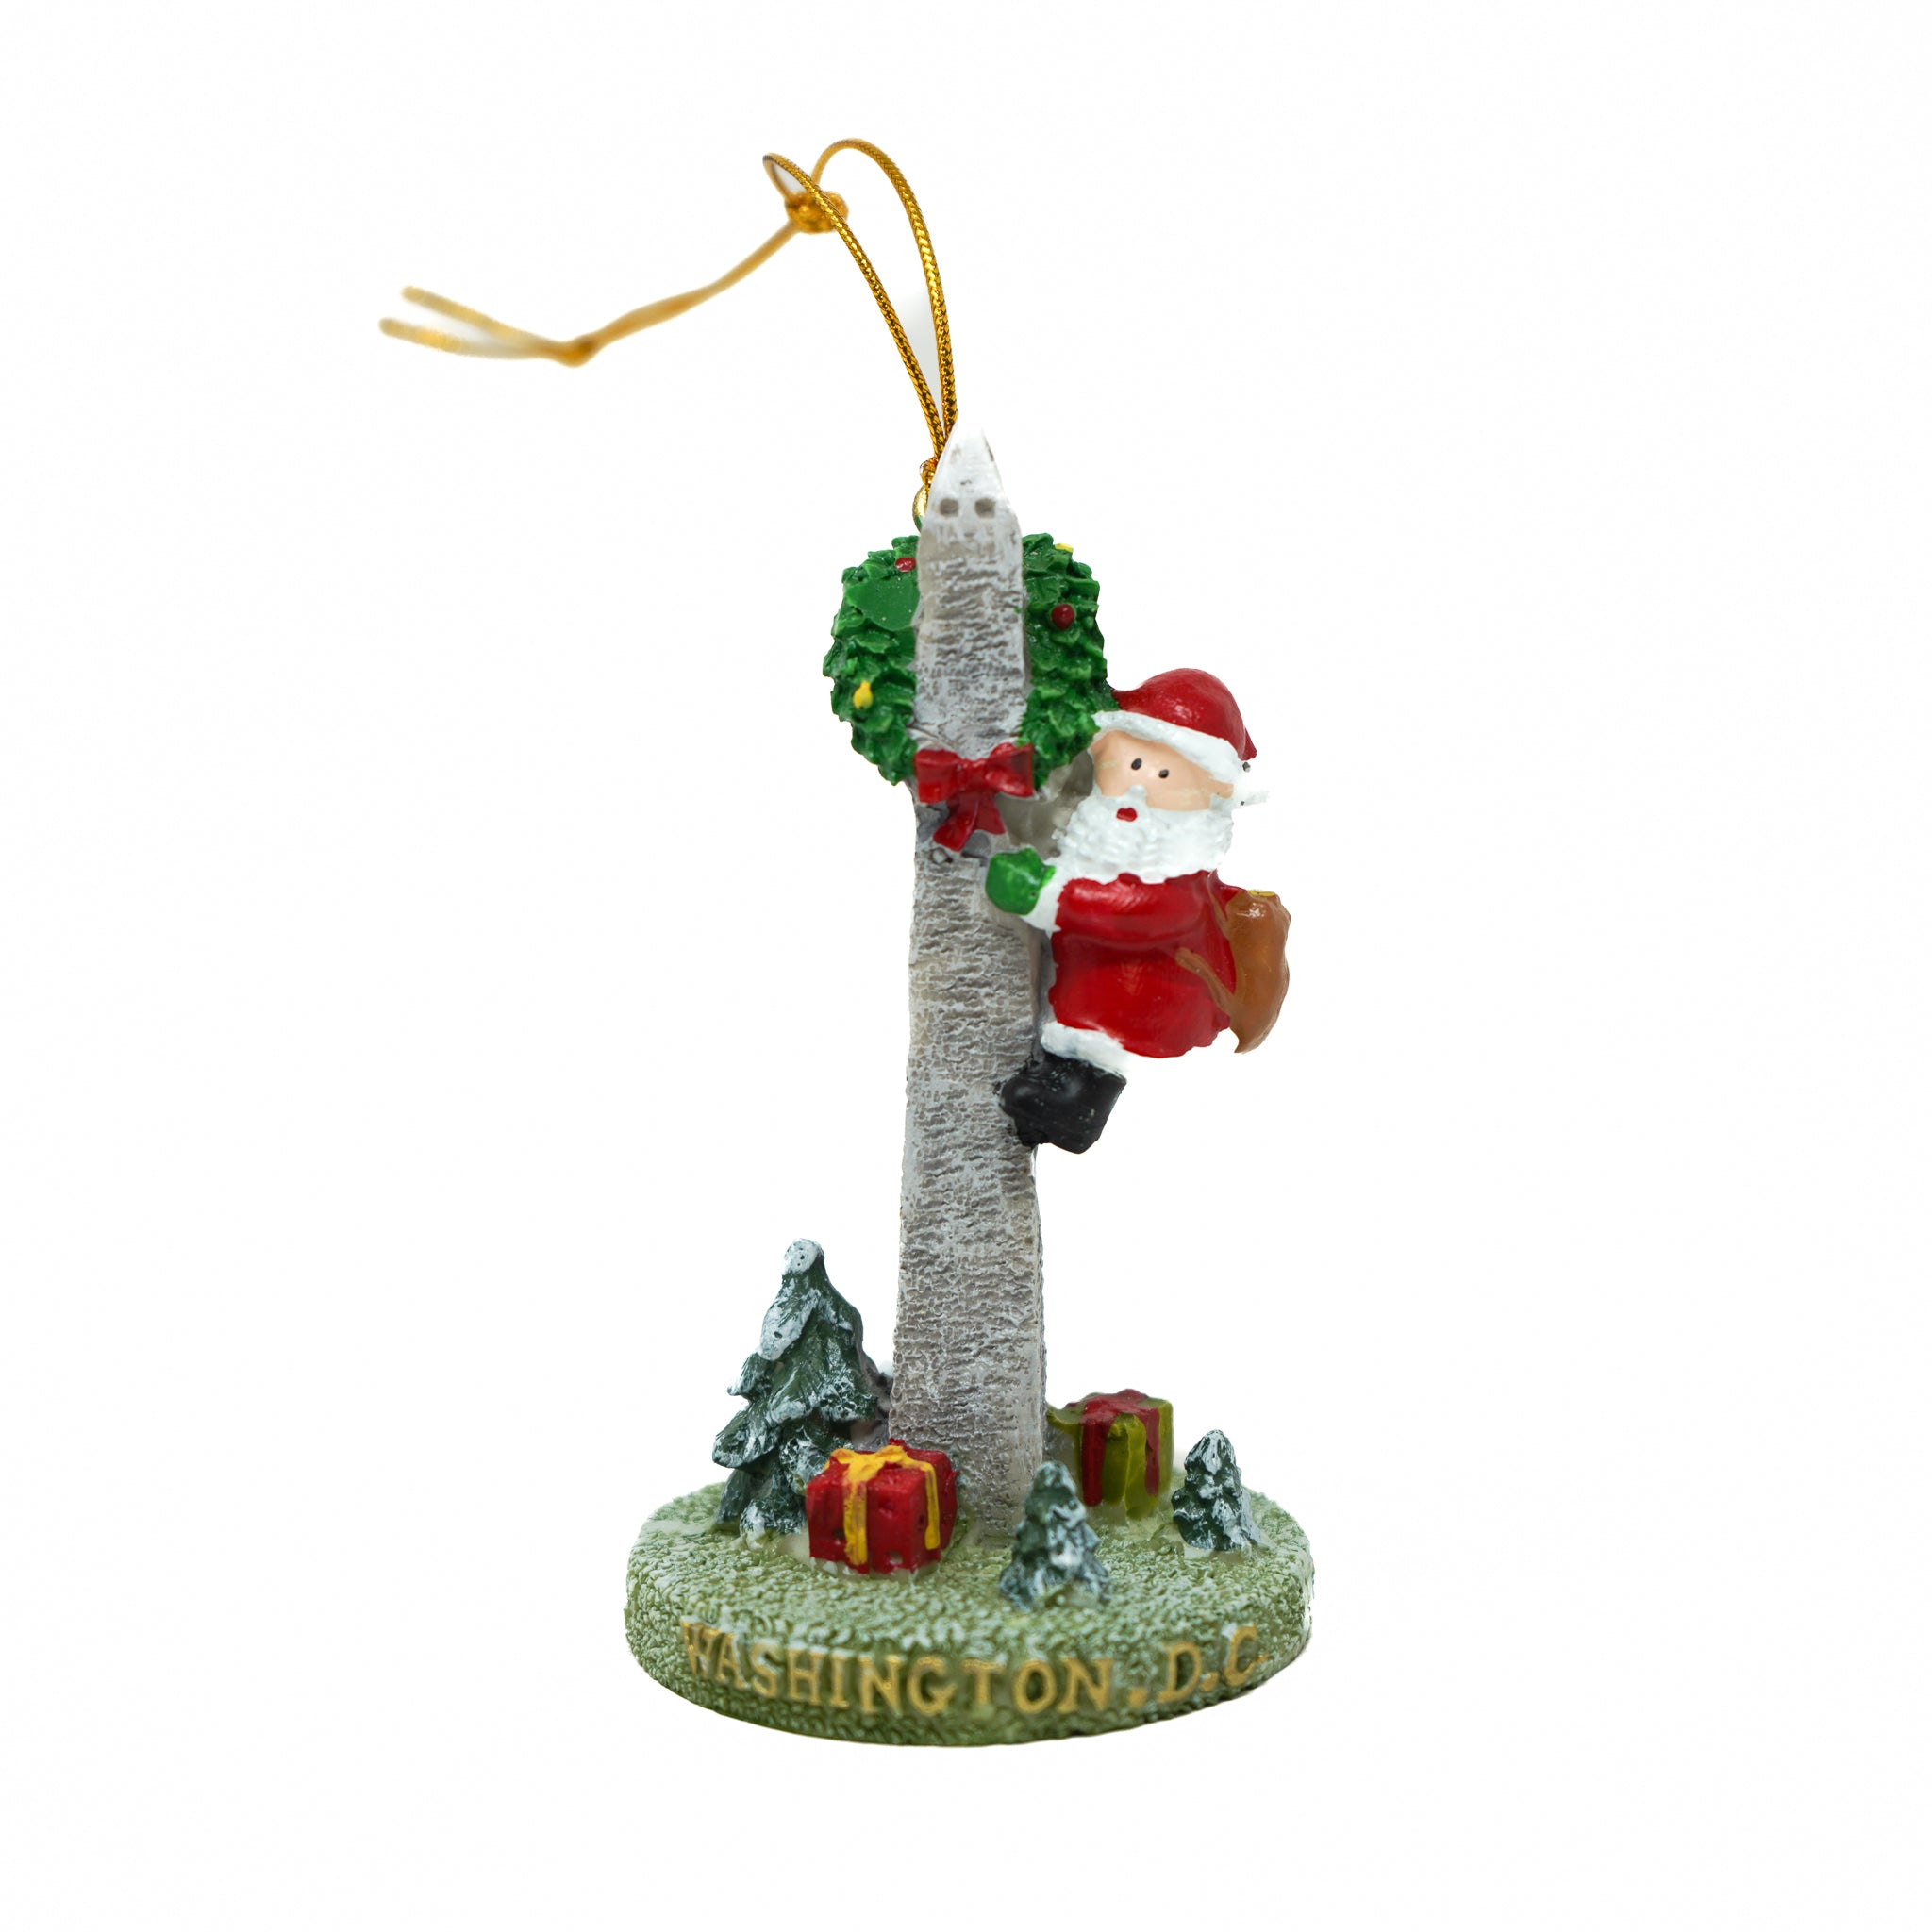 Washington Monument Christmas Ornament